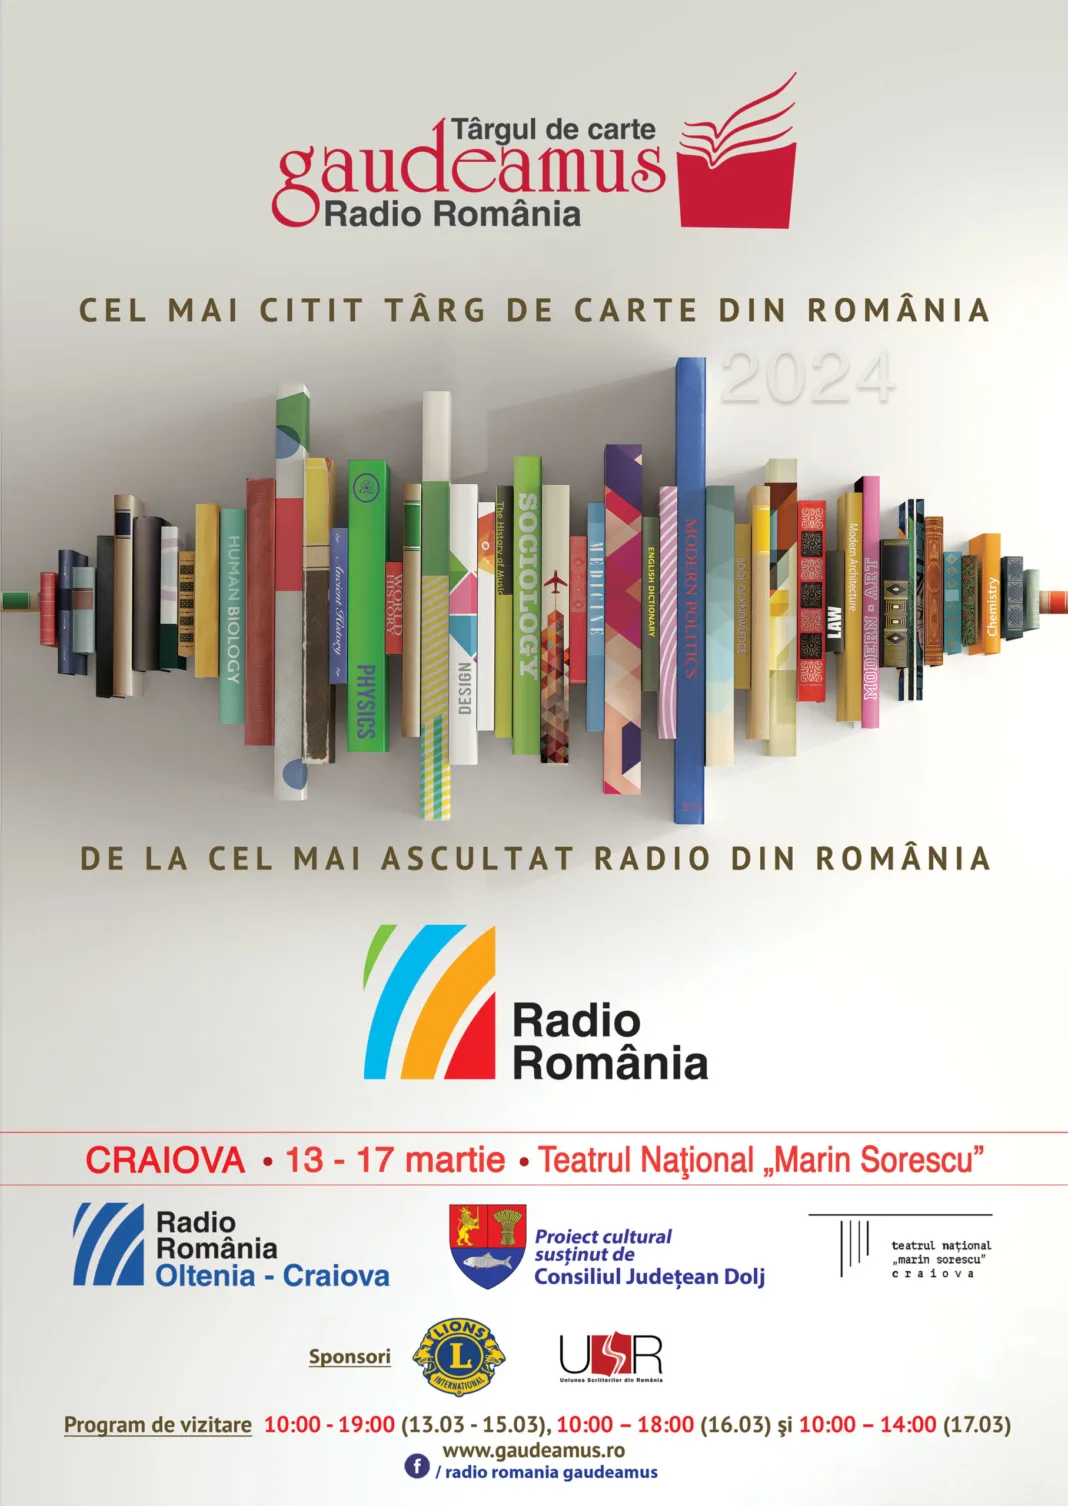 Târgul de Carte Gaudeamus Radio România Craiova, 13-17 martie 2024